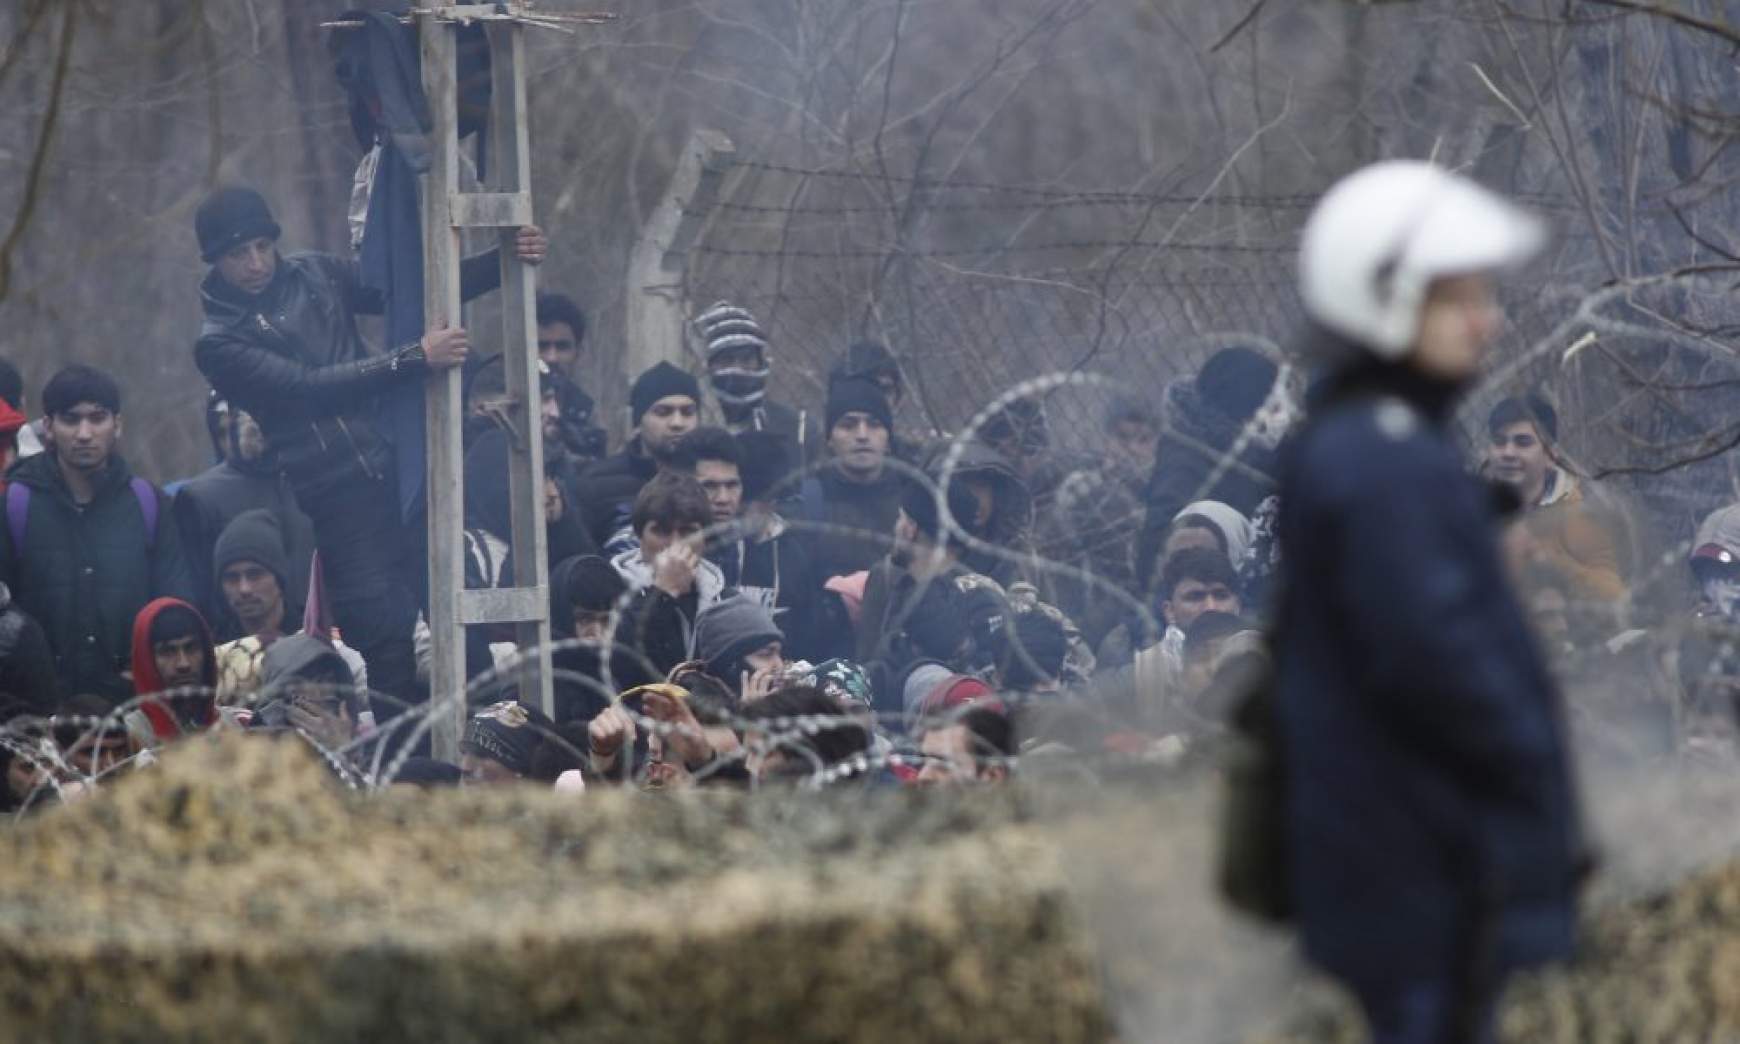 Görög-török migránsok